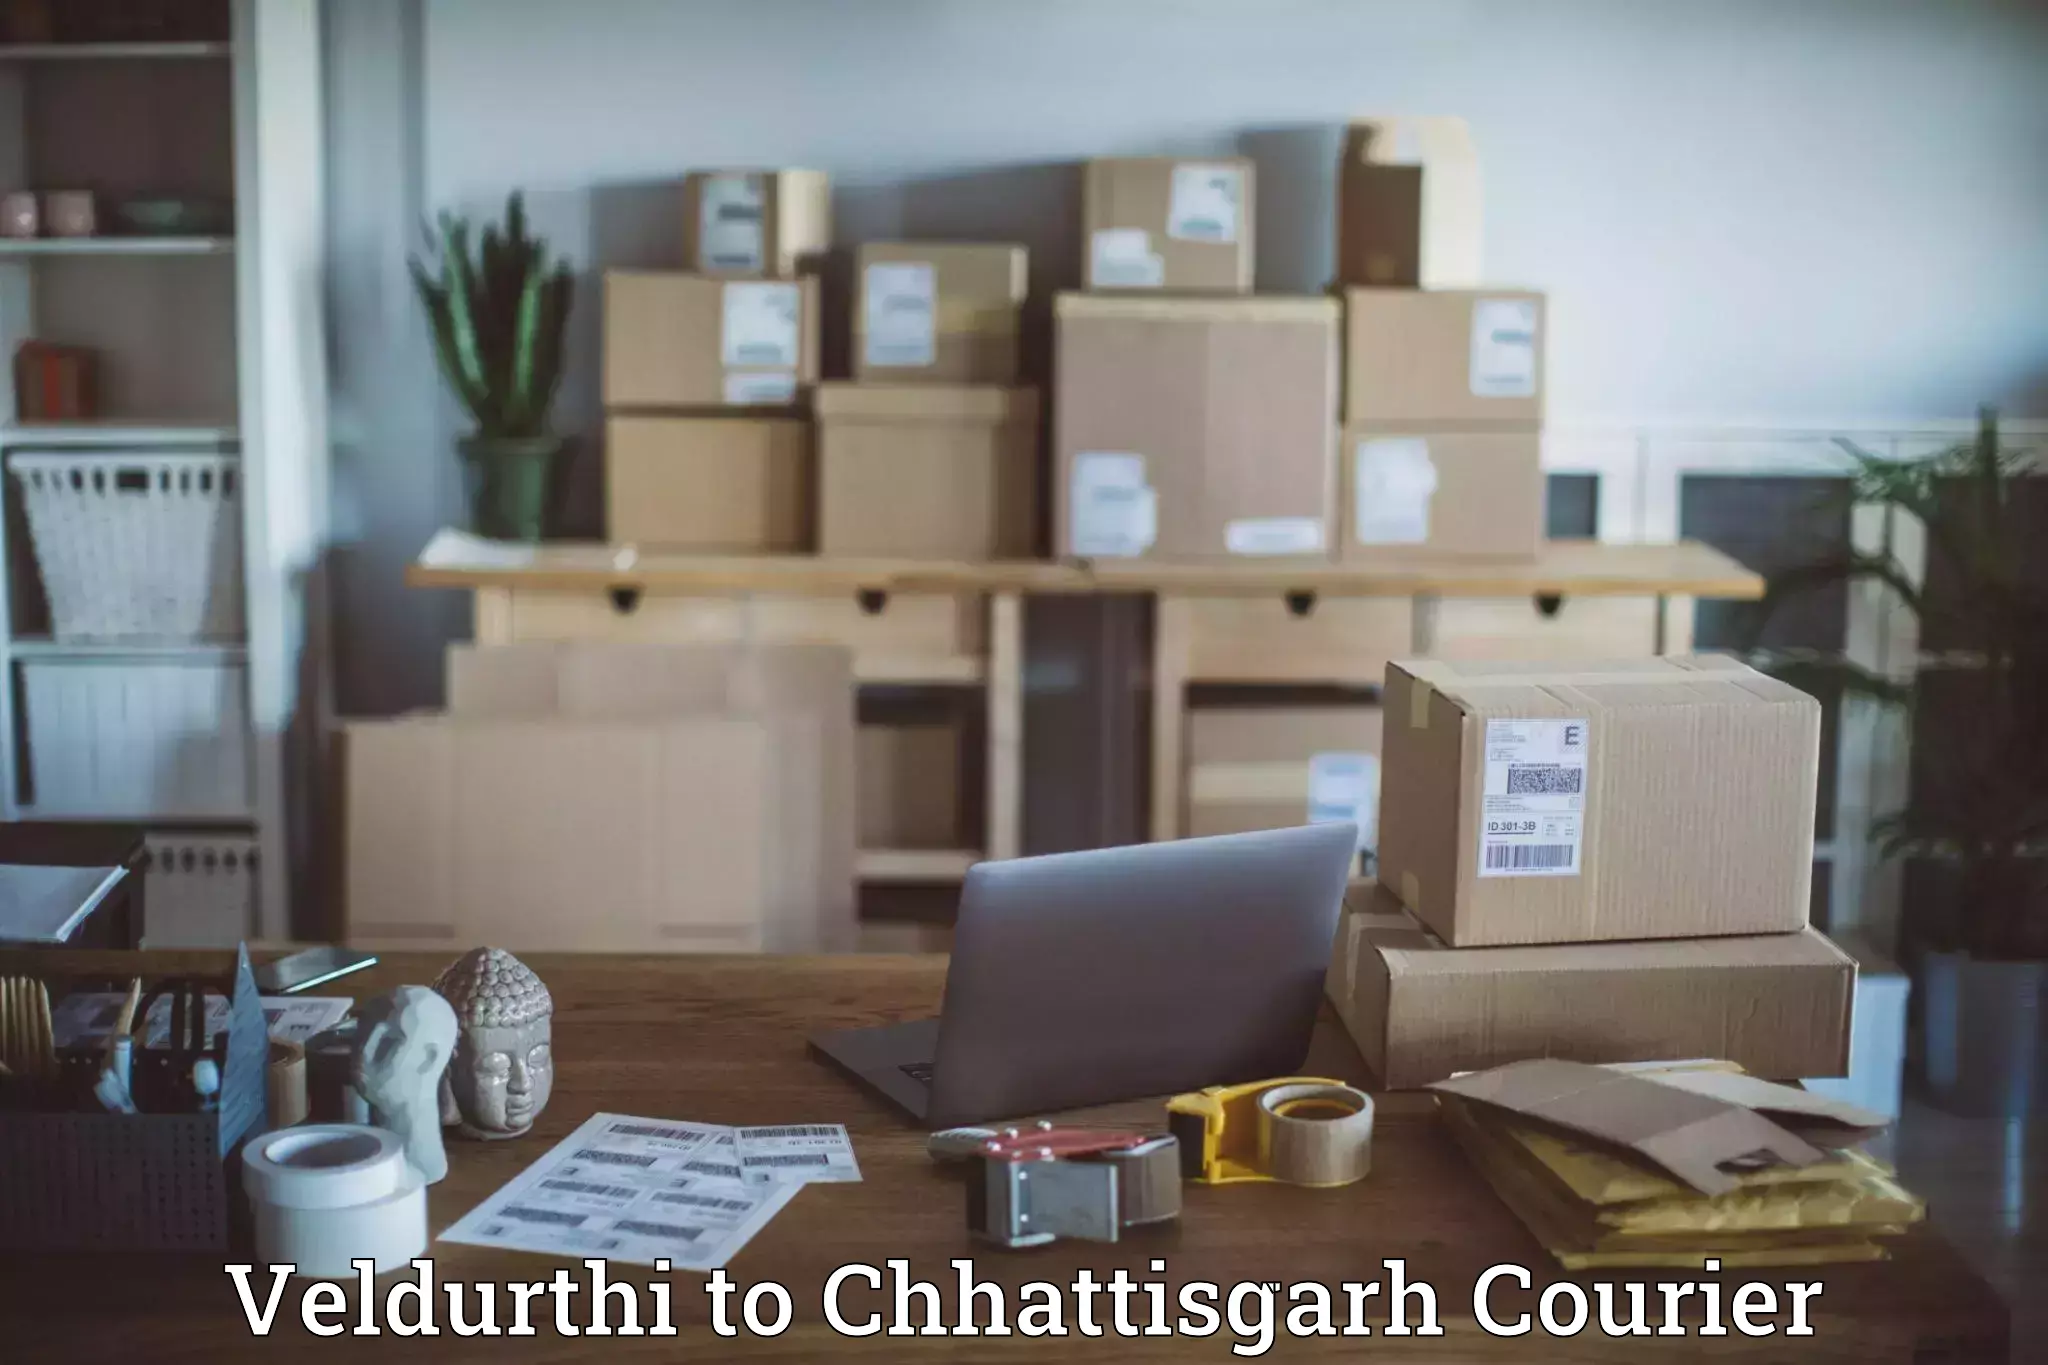 Courier service innovation Veldurthi to Chhattisgarh